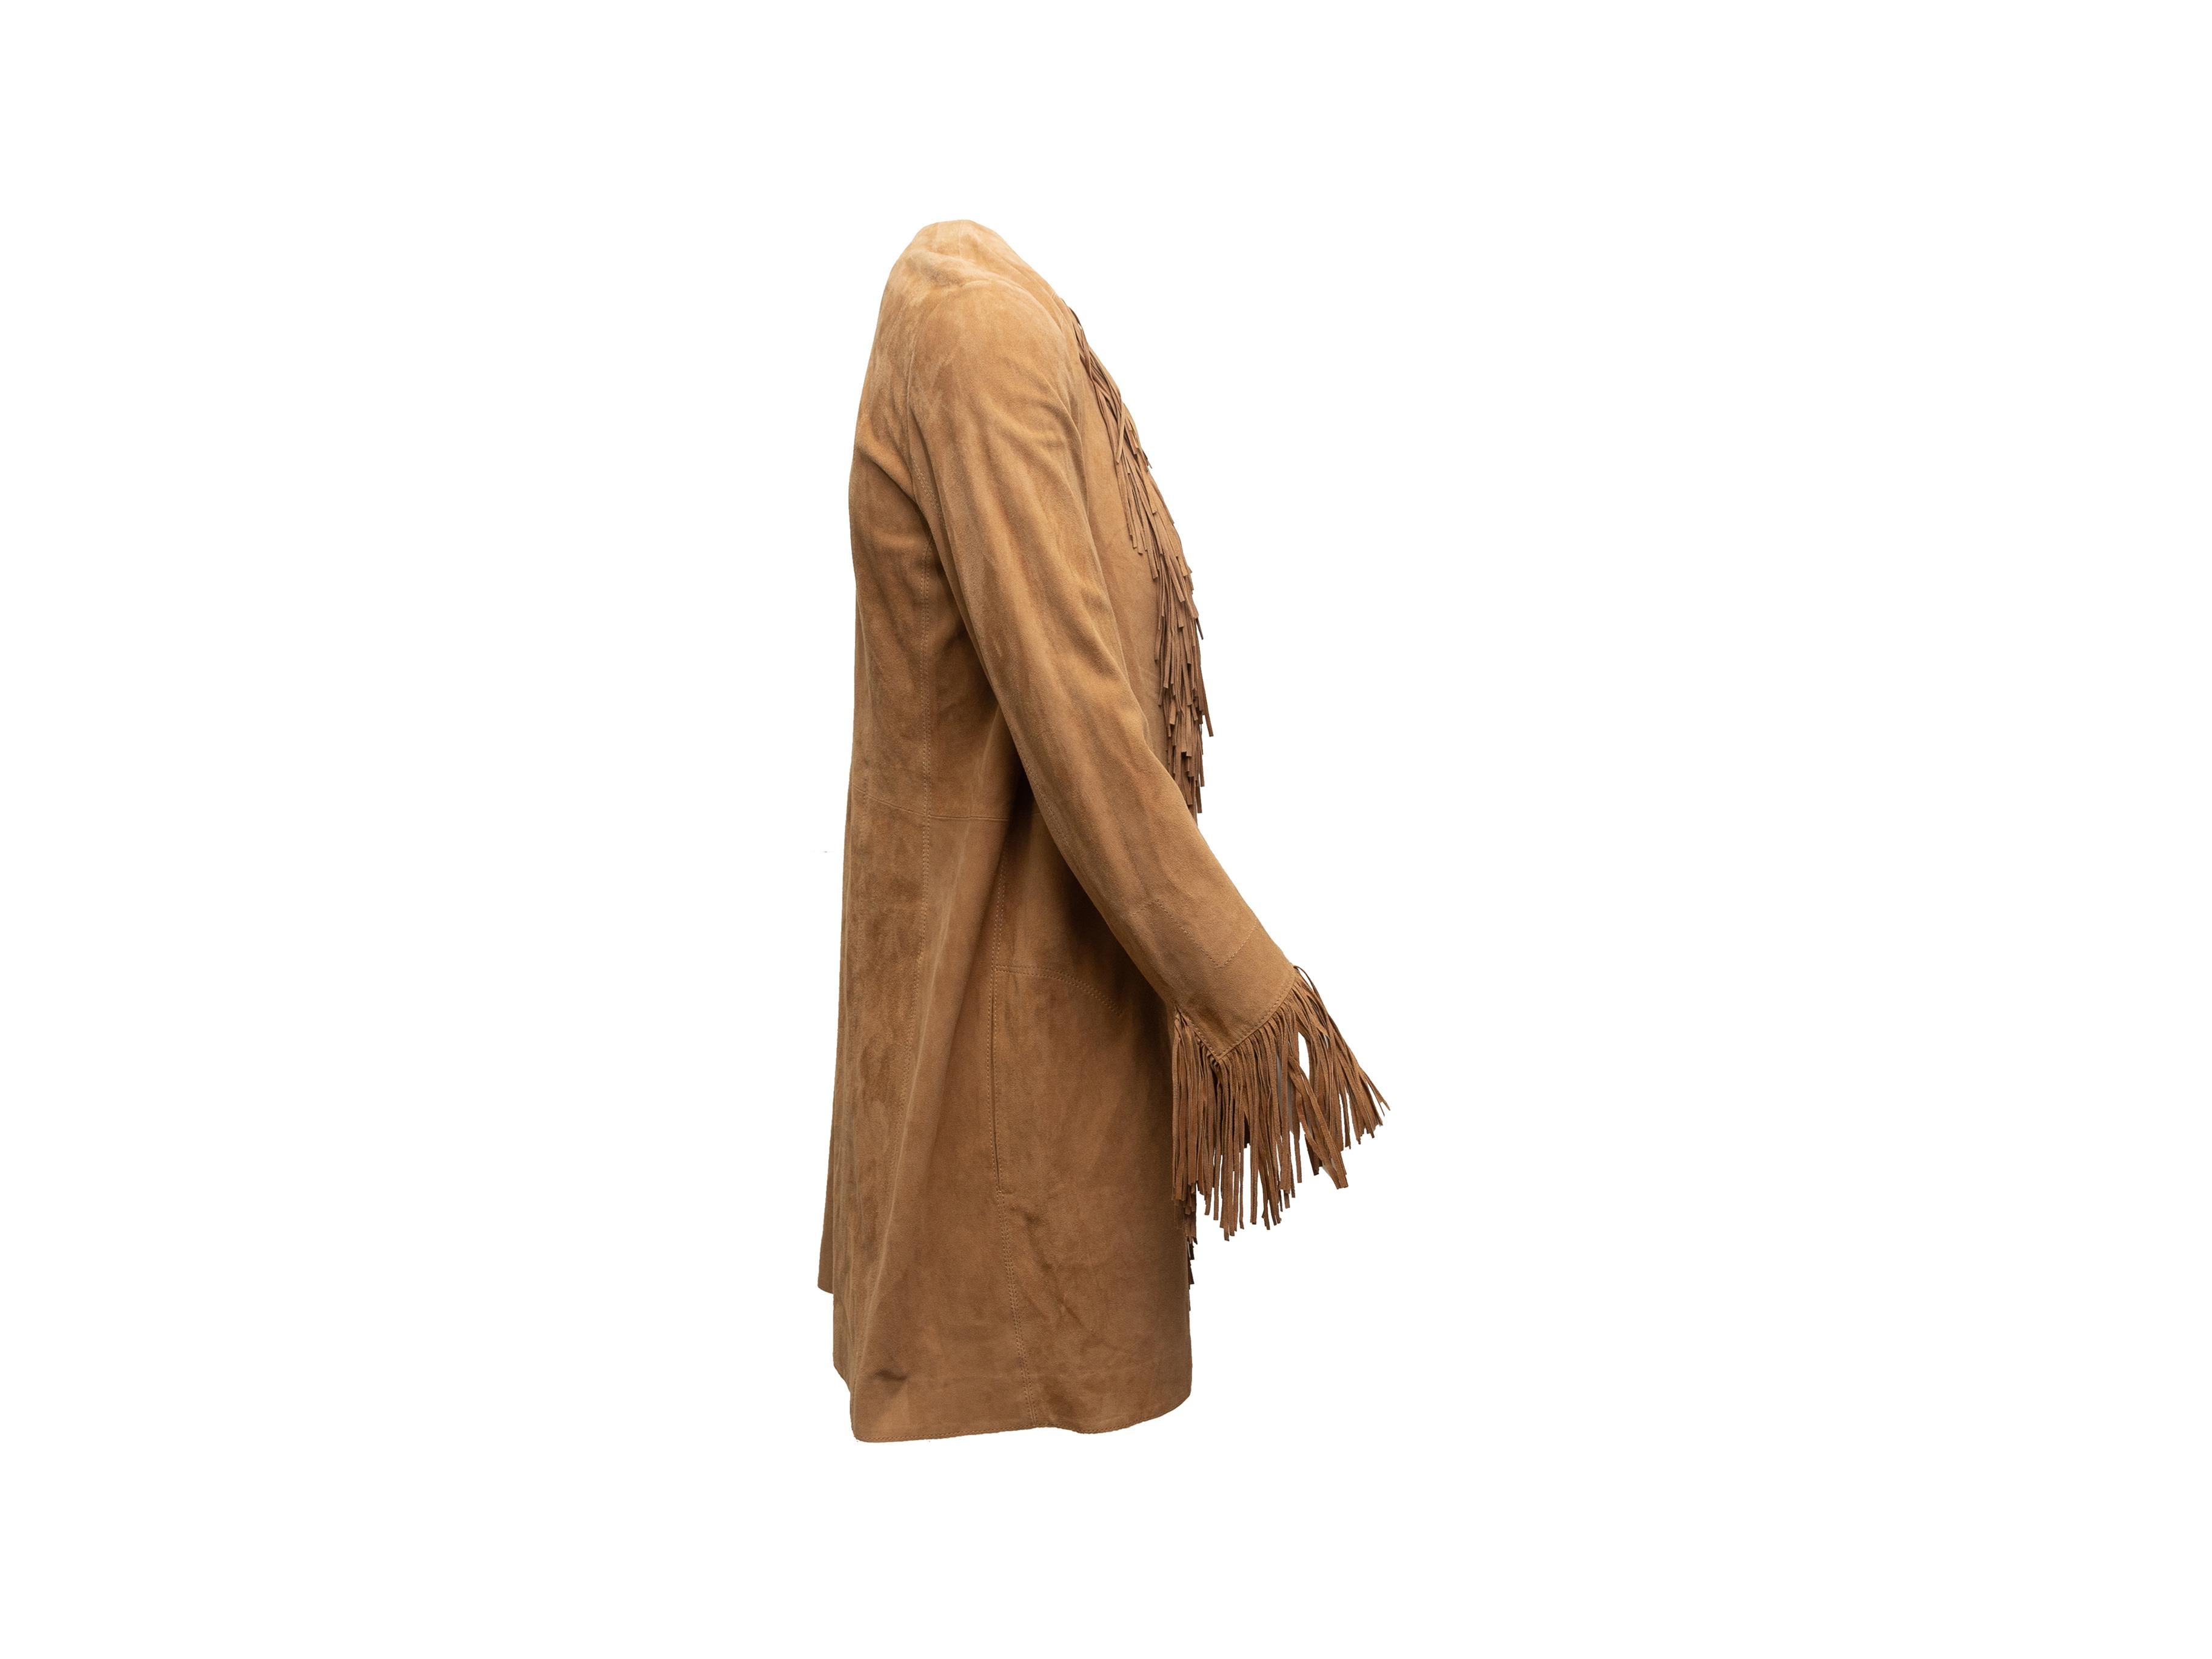 Product details: Brown suede coat by Shari's Place. Fringe trim throughout. V-neck. Designer size 36. 15